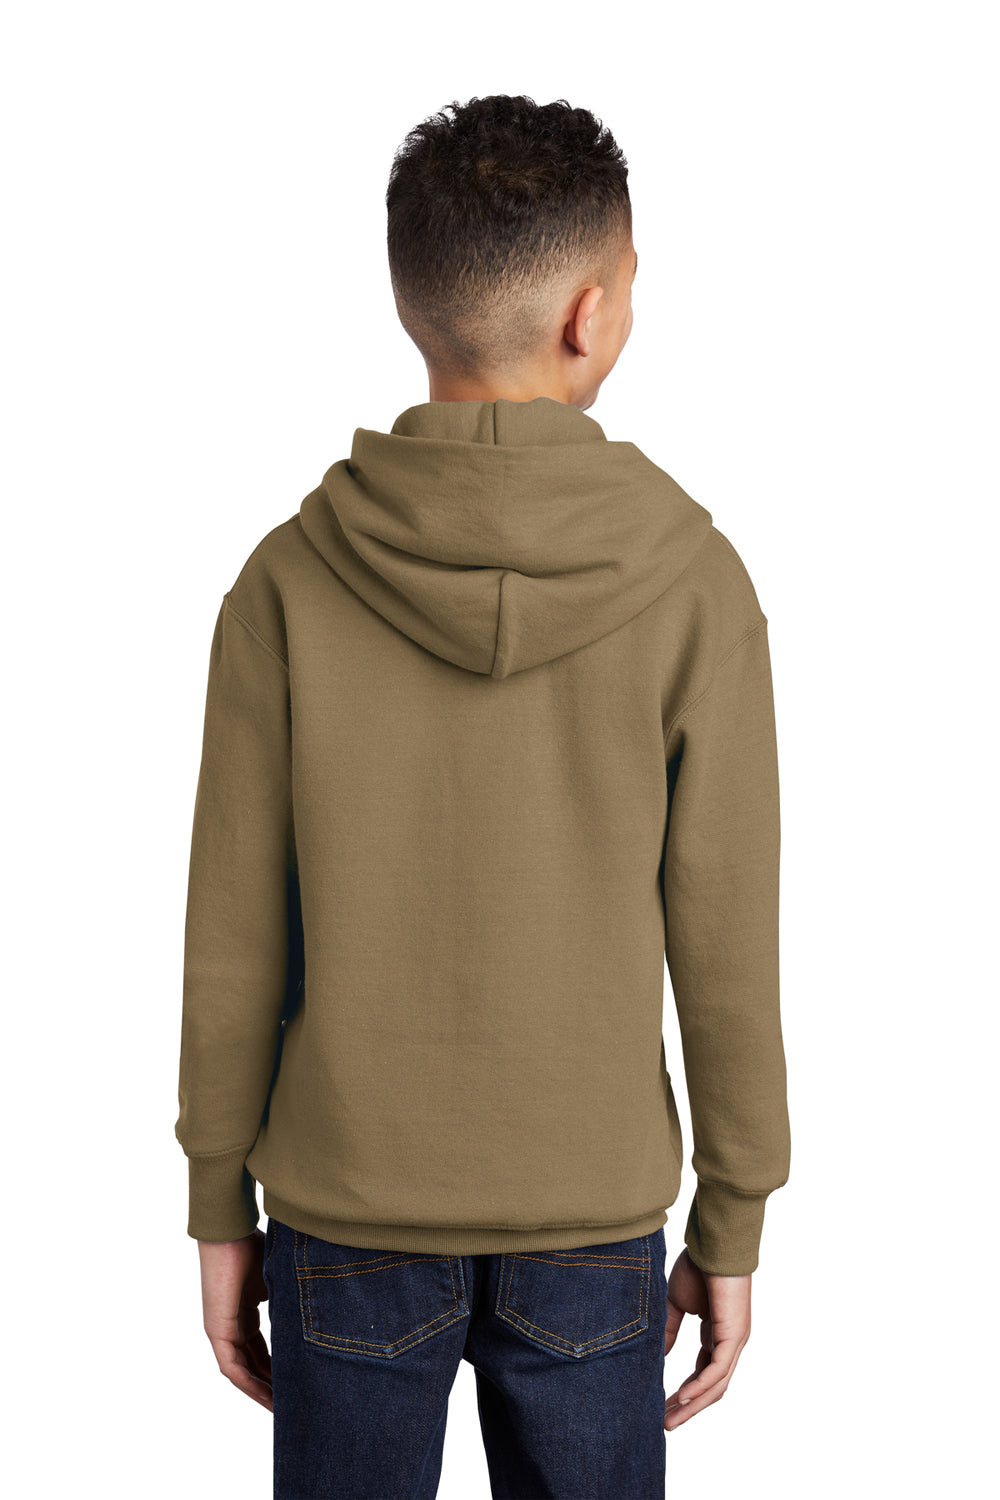 Port & Company PC90YH Youth Core Fleece Hooded Sweatshirt Hoodie Coyote Brown Back